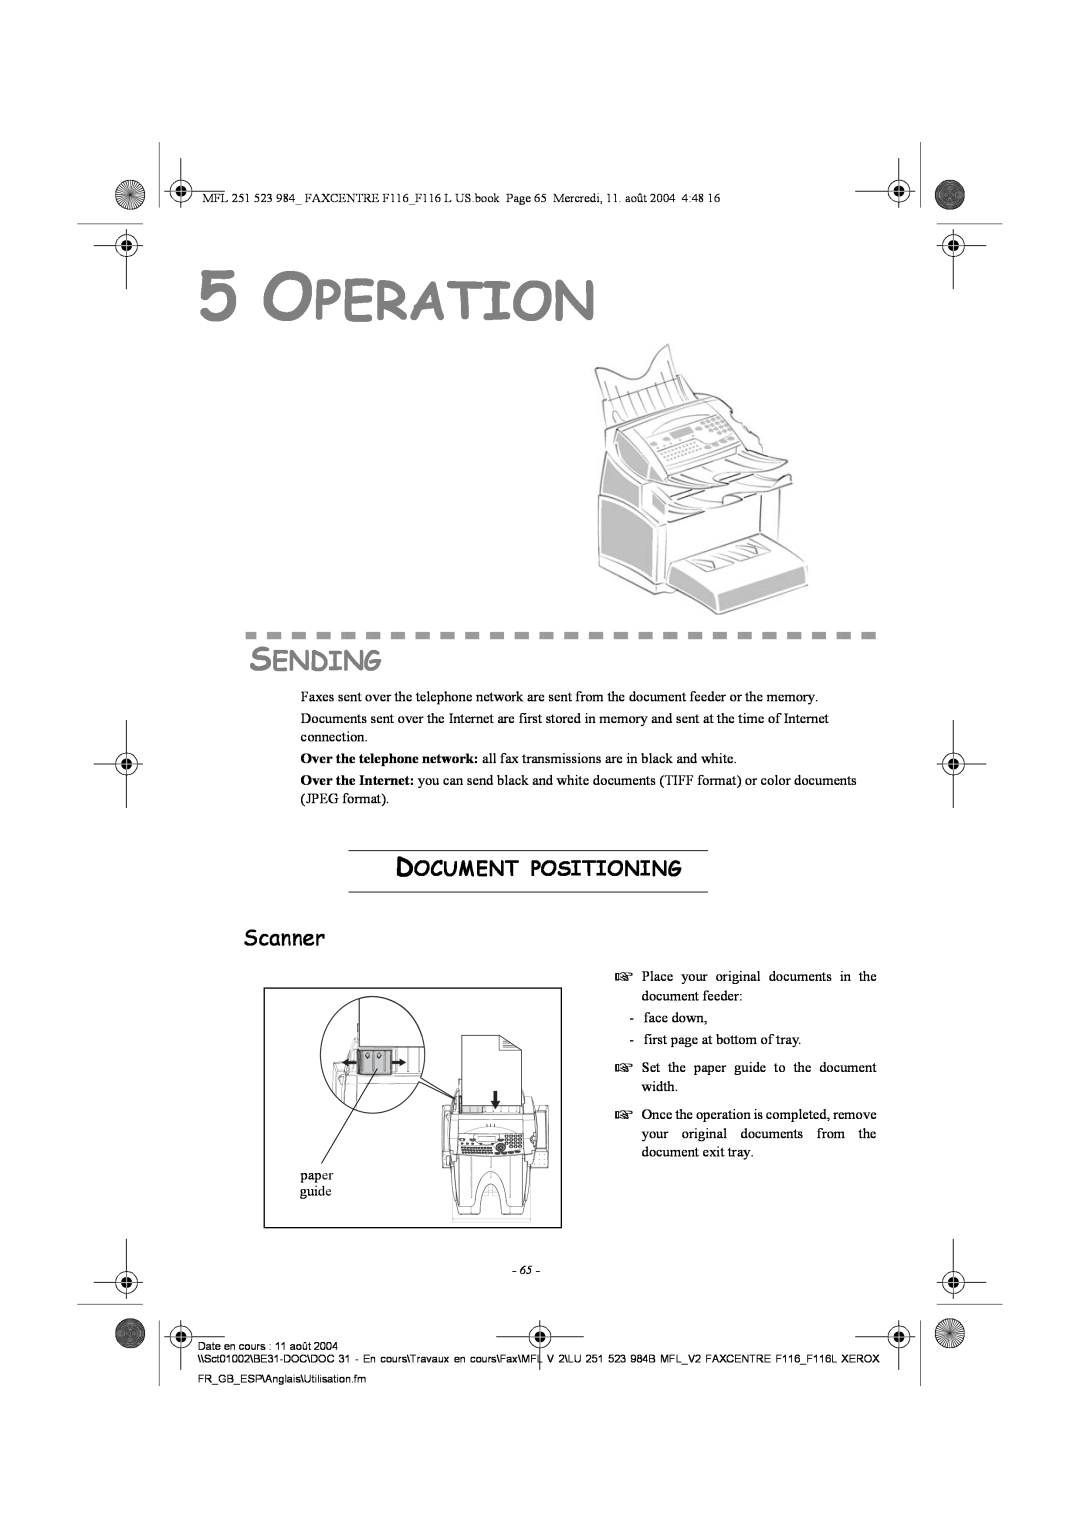 Xerox F116 user manual 5OPERATION, Sending, Scanner, Document Positioning 